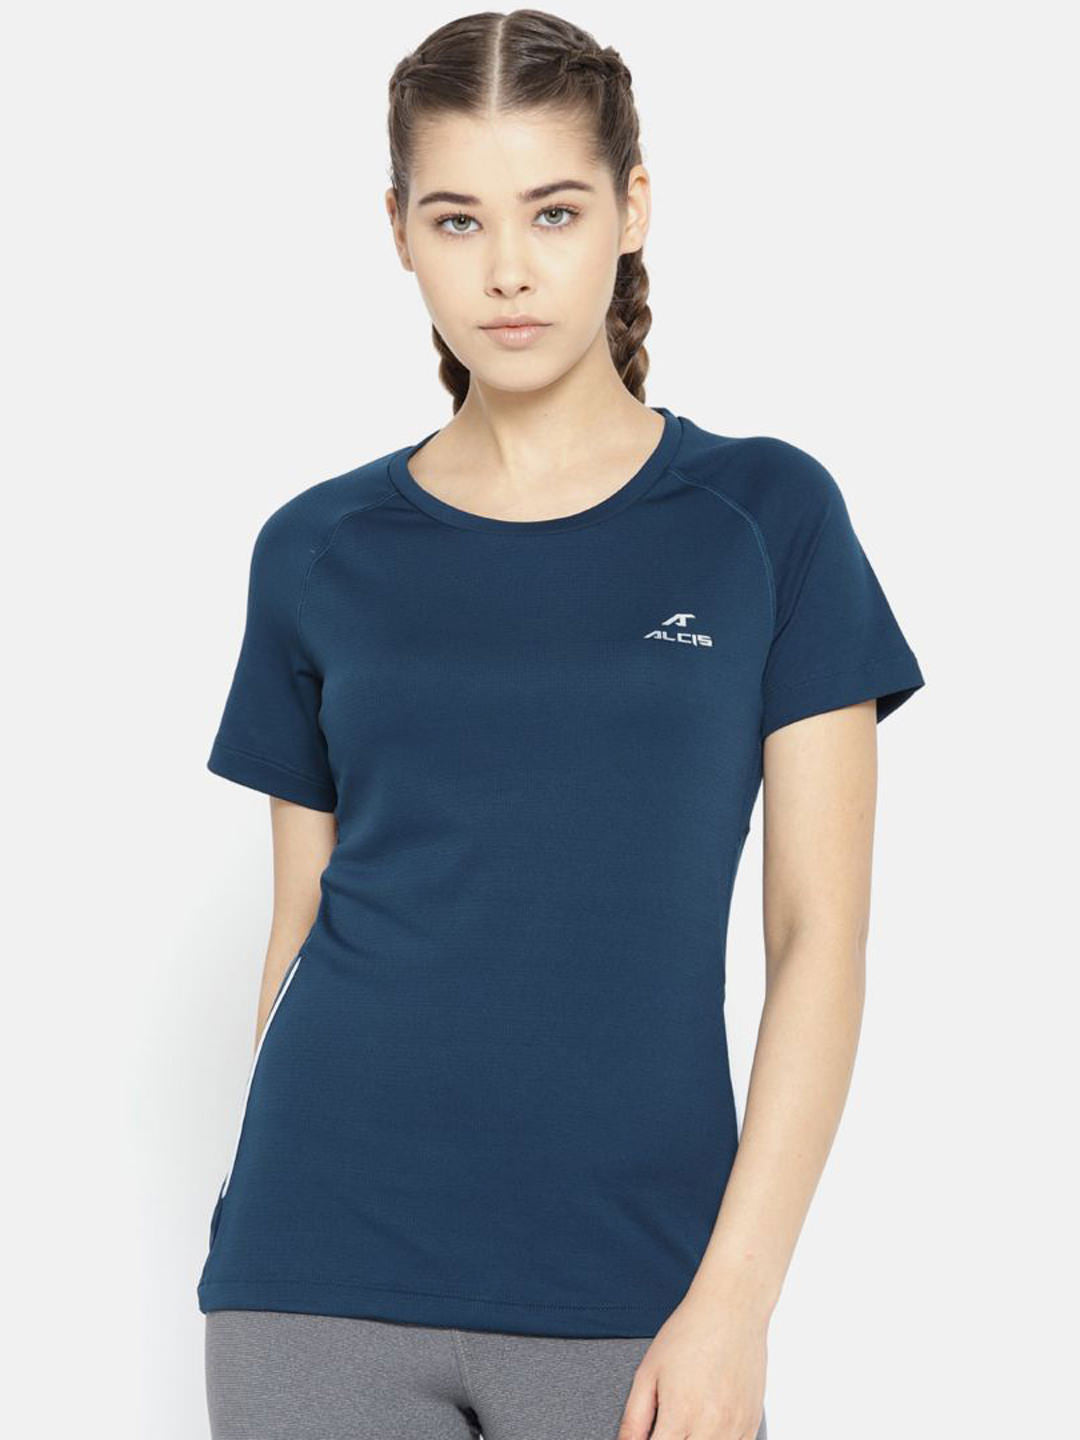 Alcis Women Navy Blue Solid Round Neck Running T-shirt